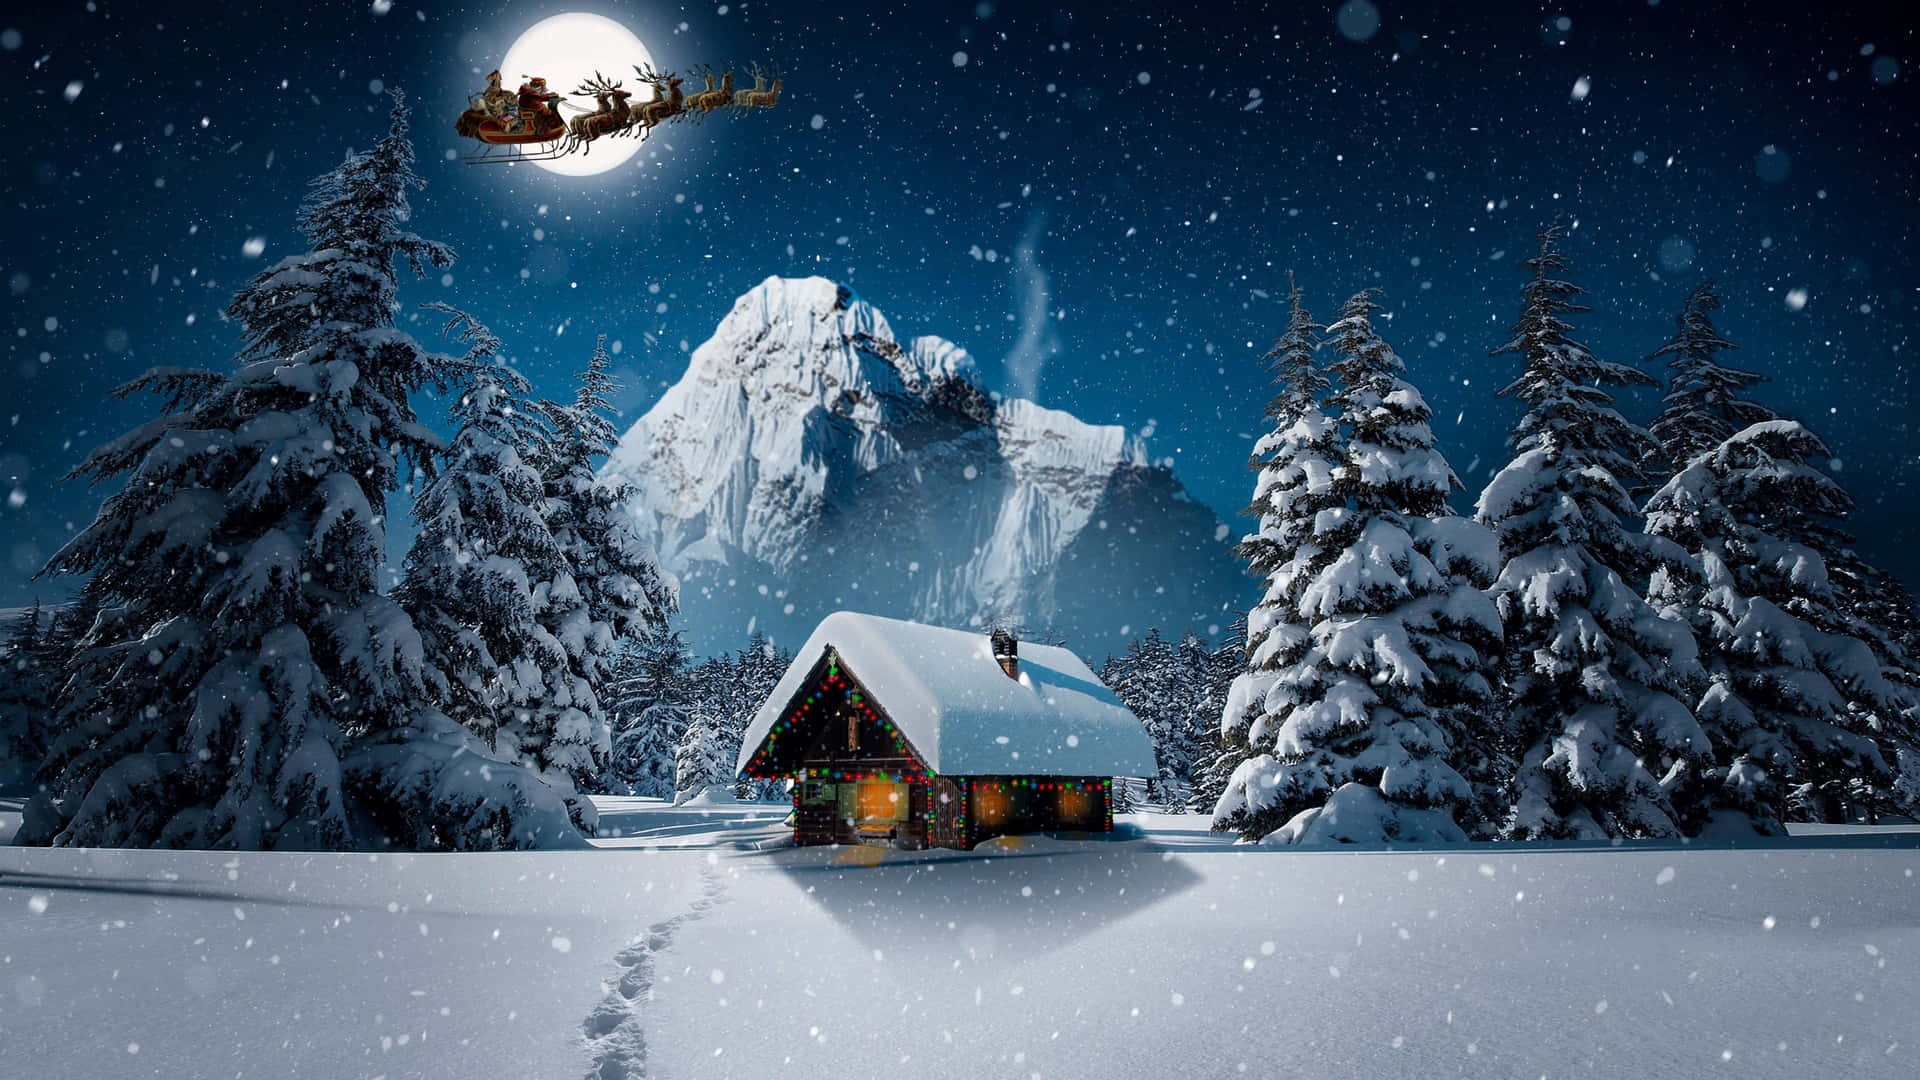 Digital Art Cool Christmas Cabin And Santa Claus